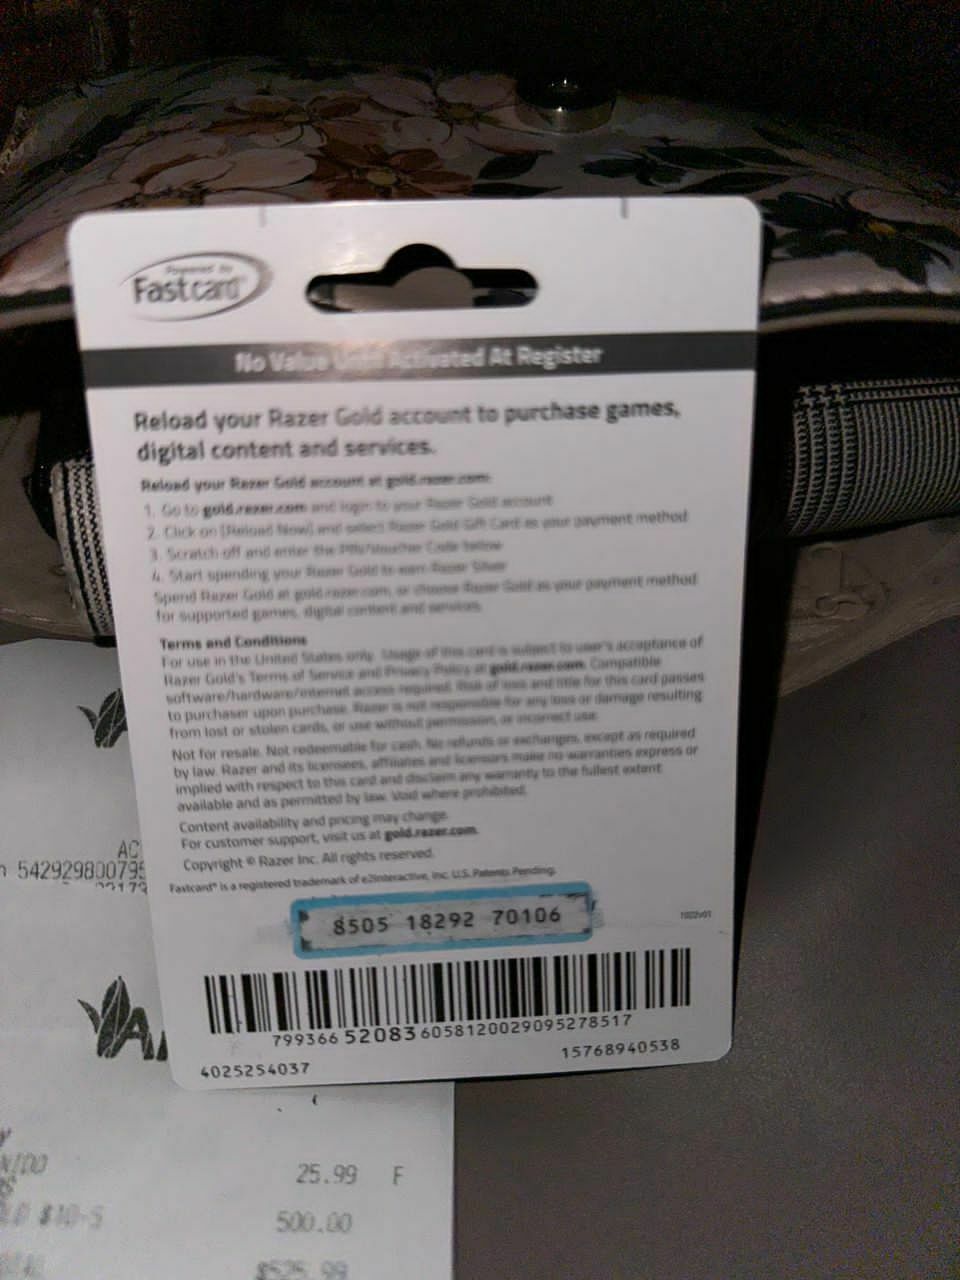 Razer Gift Card - Gaming Peripherals, Laptops, and more | Razer United States